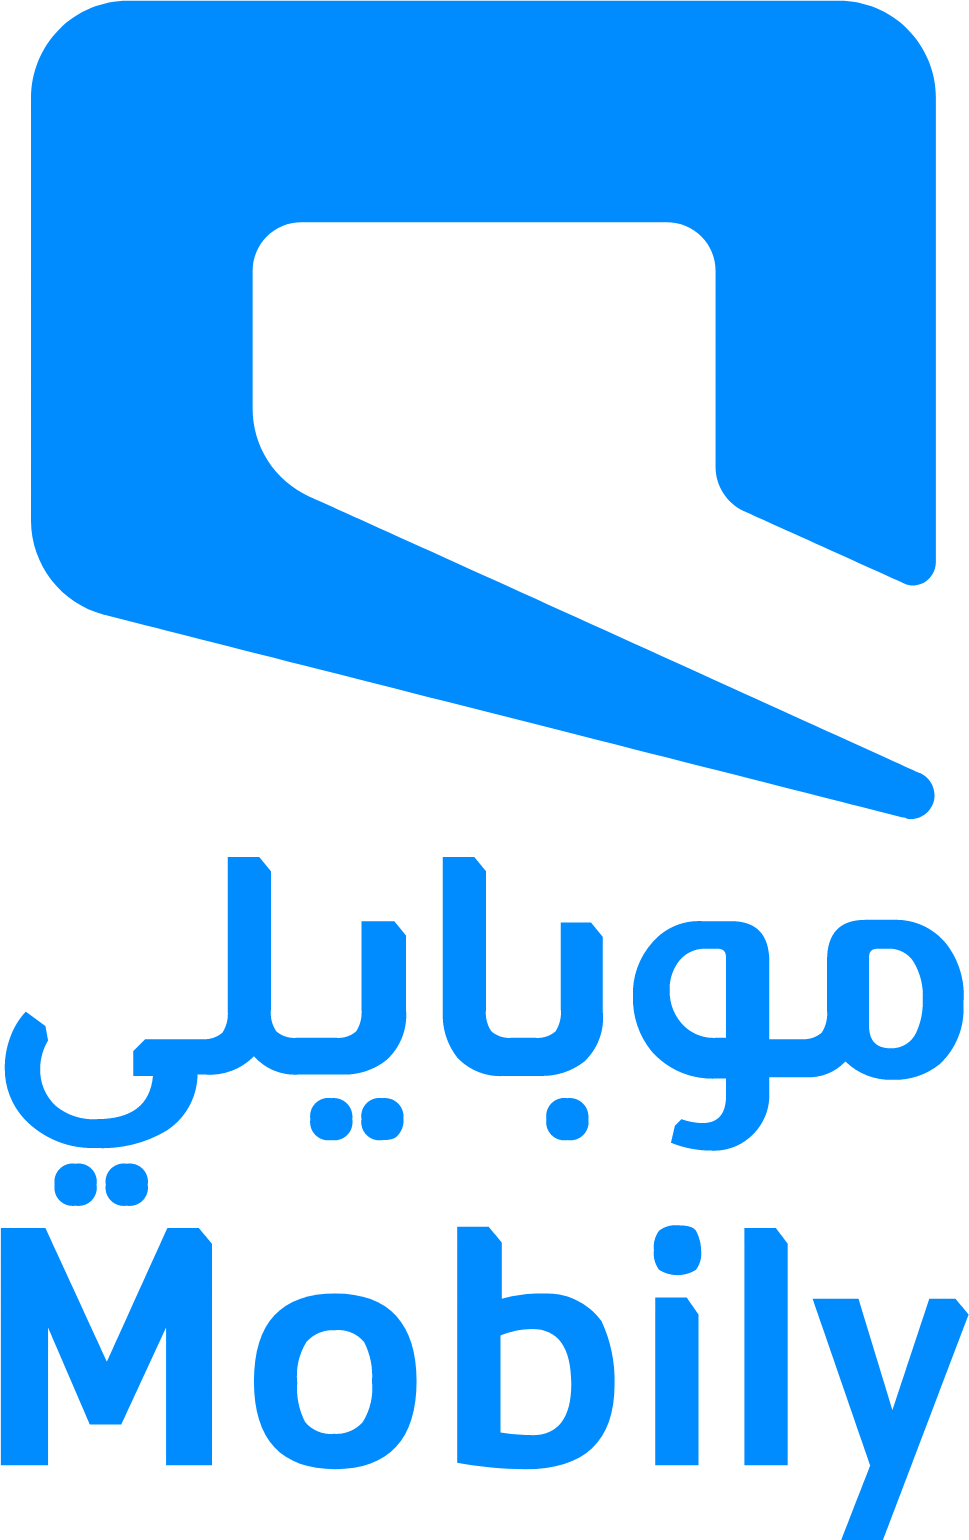 Etihad Etisalat (Mobily) logo large (transparent PNG)